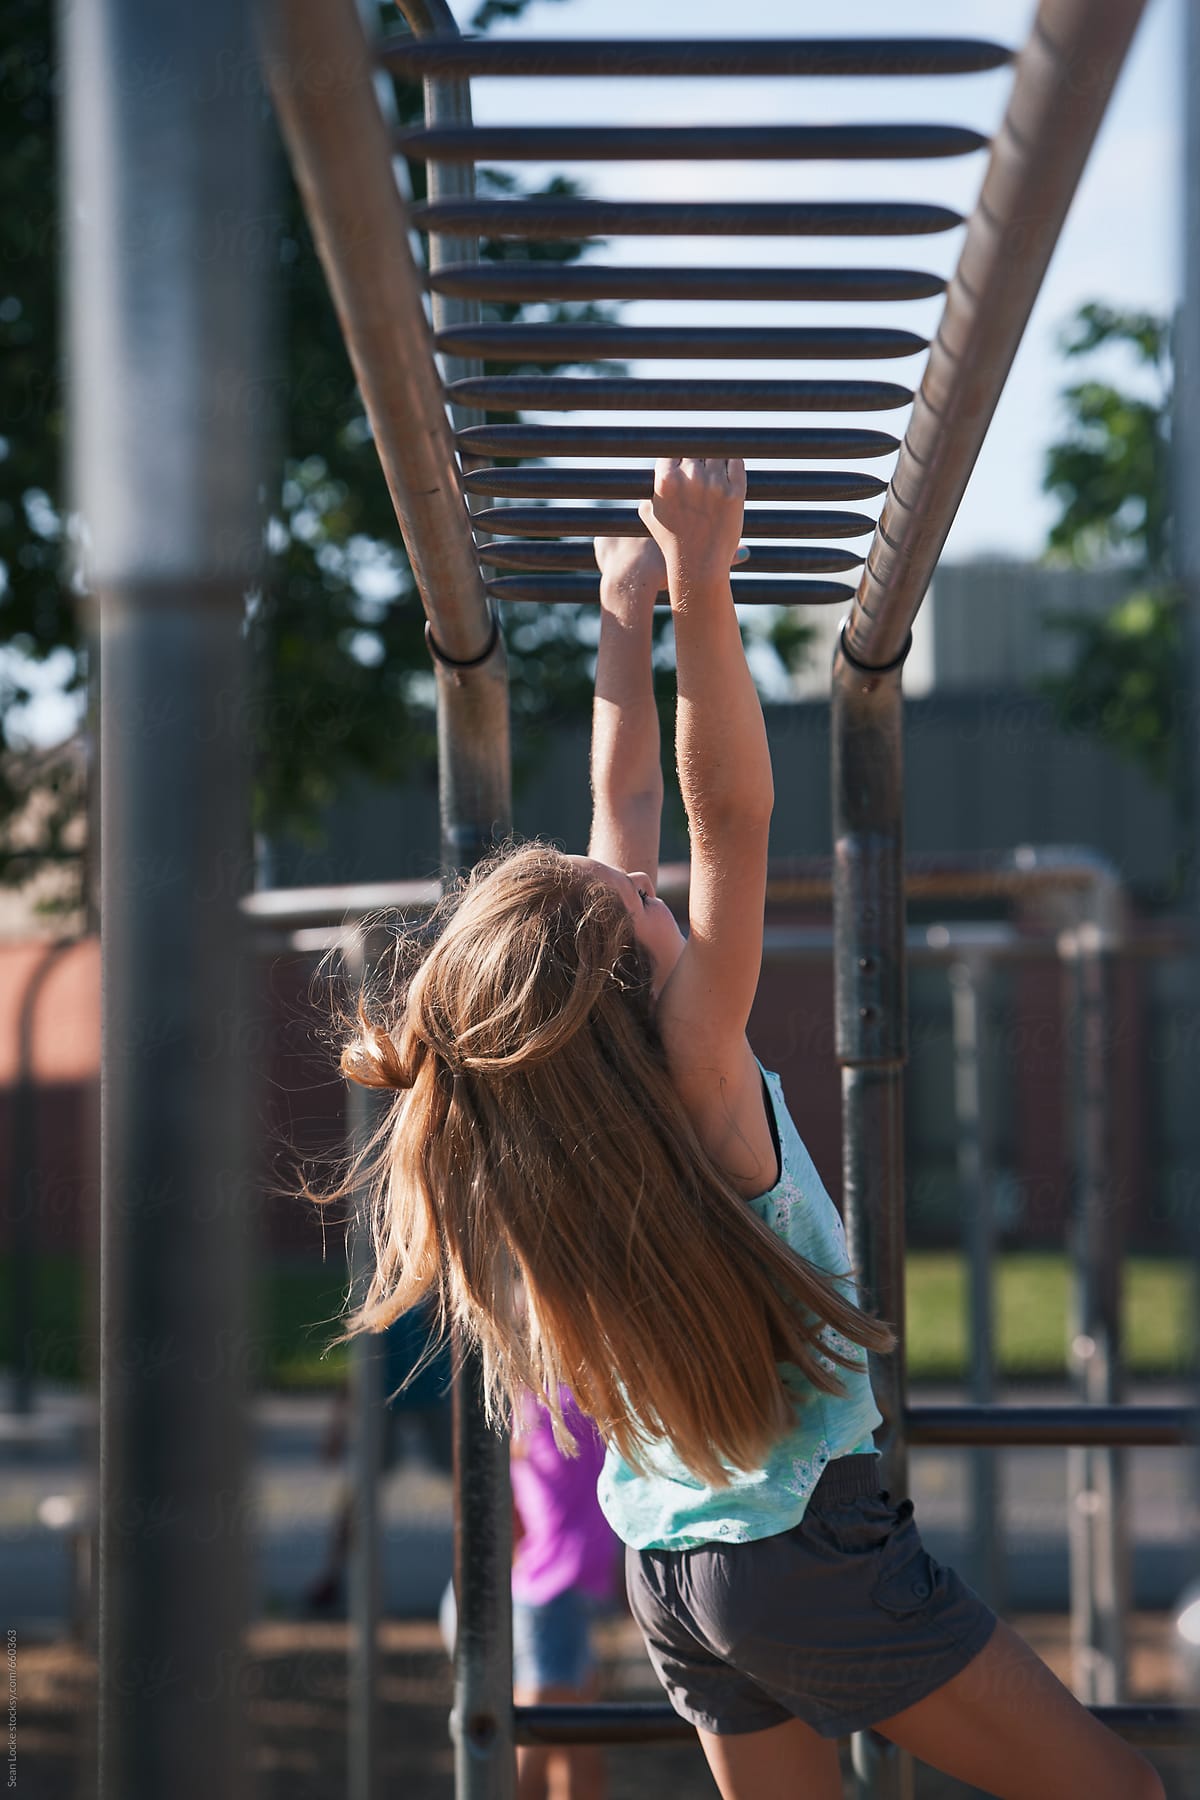 Recess: Schoolgirl Hanging From Playground Monkey Bars by Sean Locke